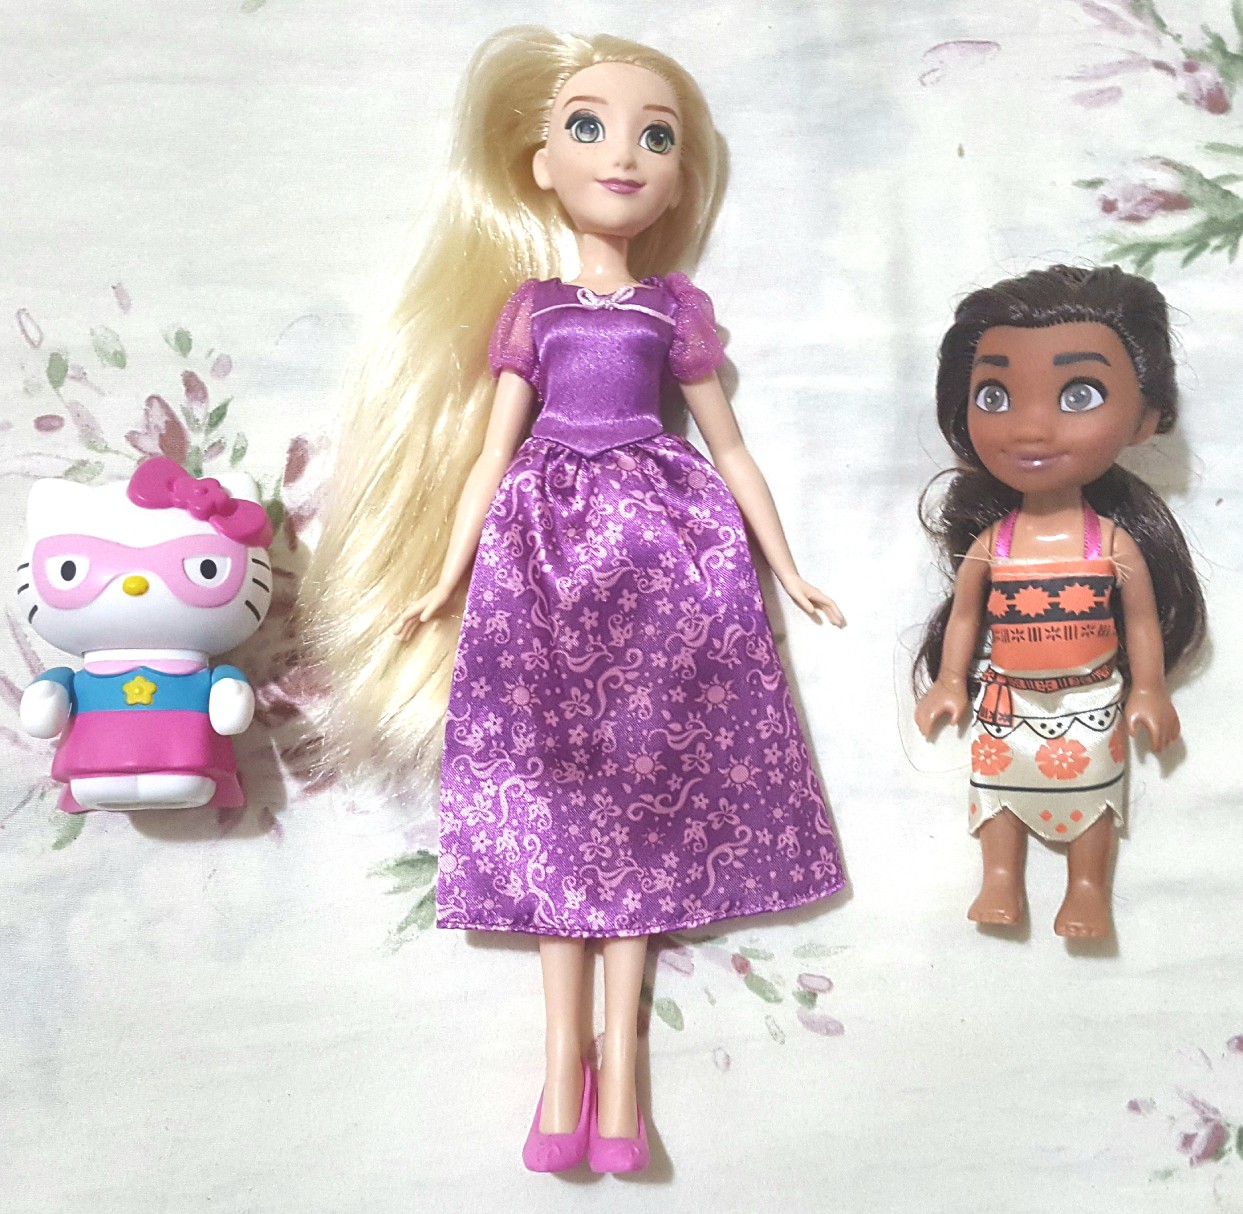 juguetes - Muñecas (Barbie Princesa+Helo Ketty+Mini Muñeca